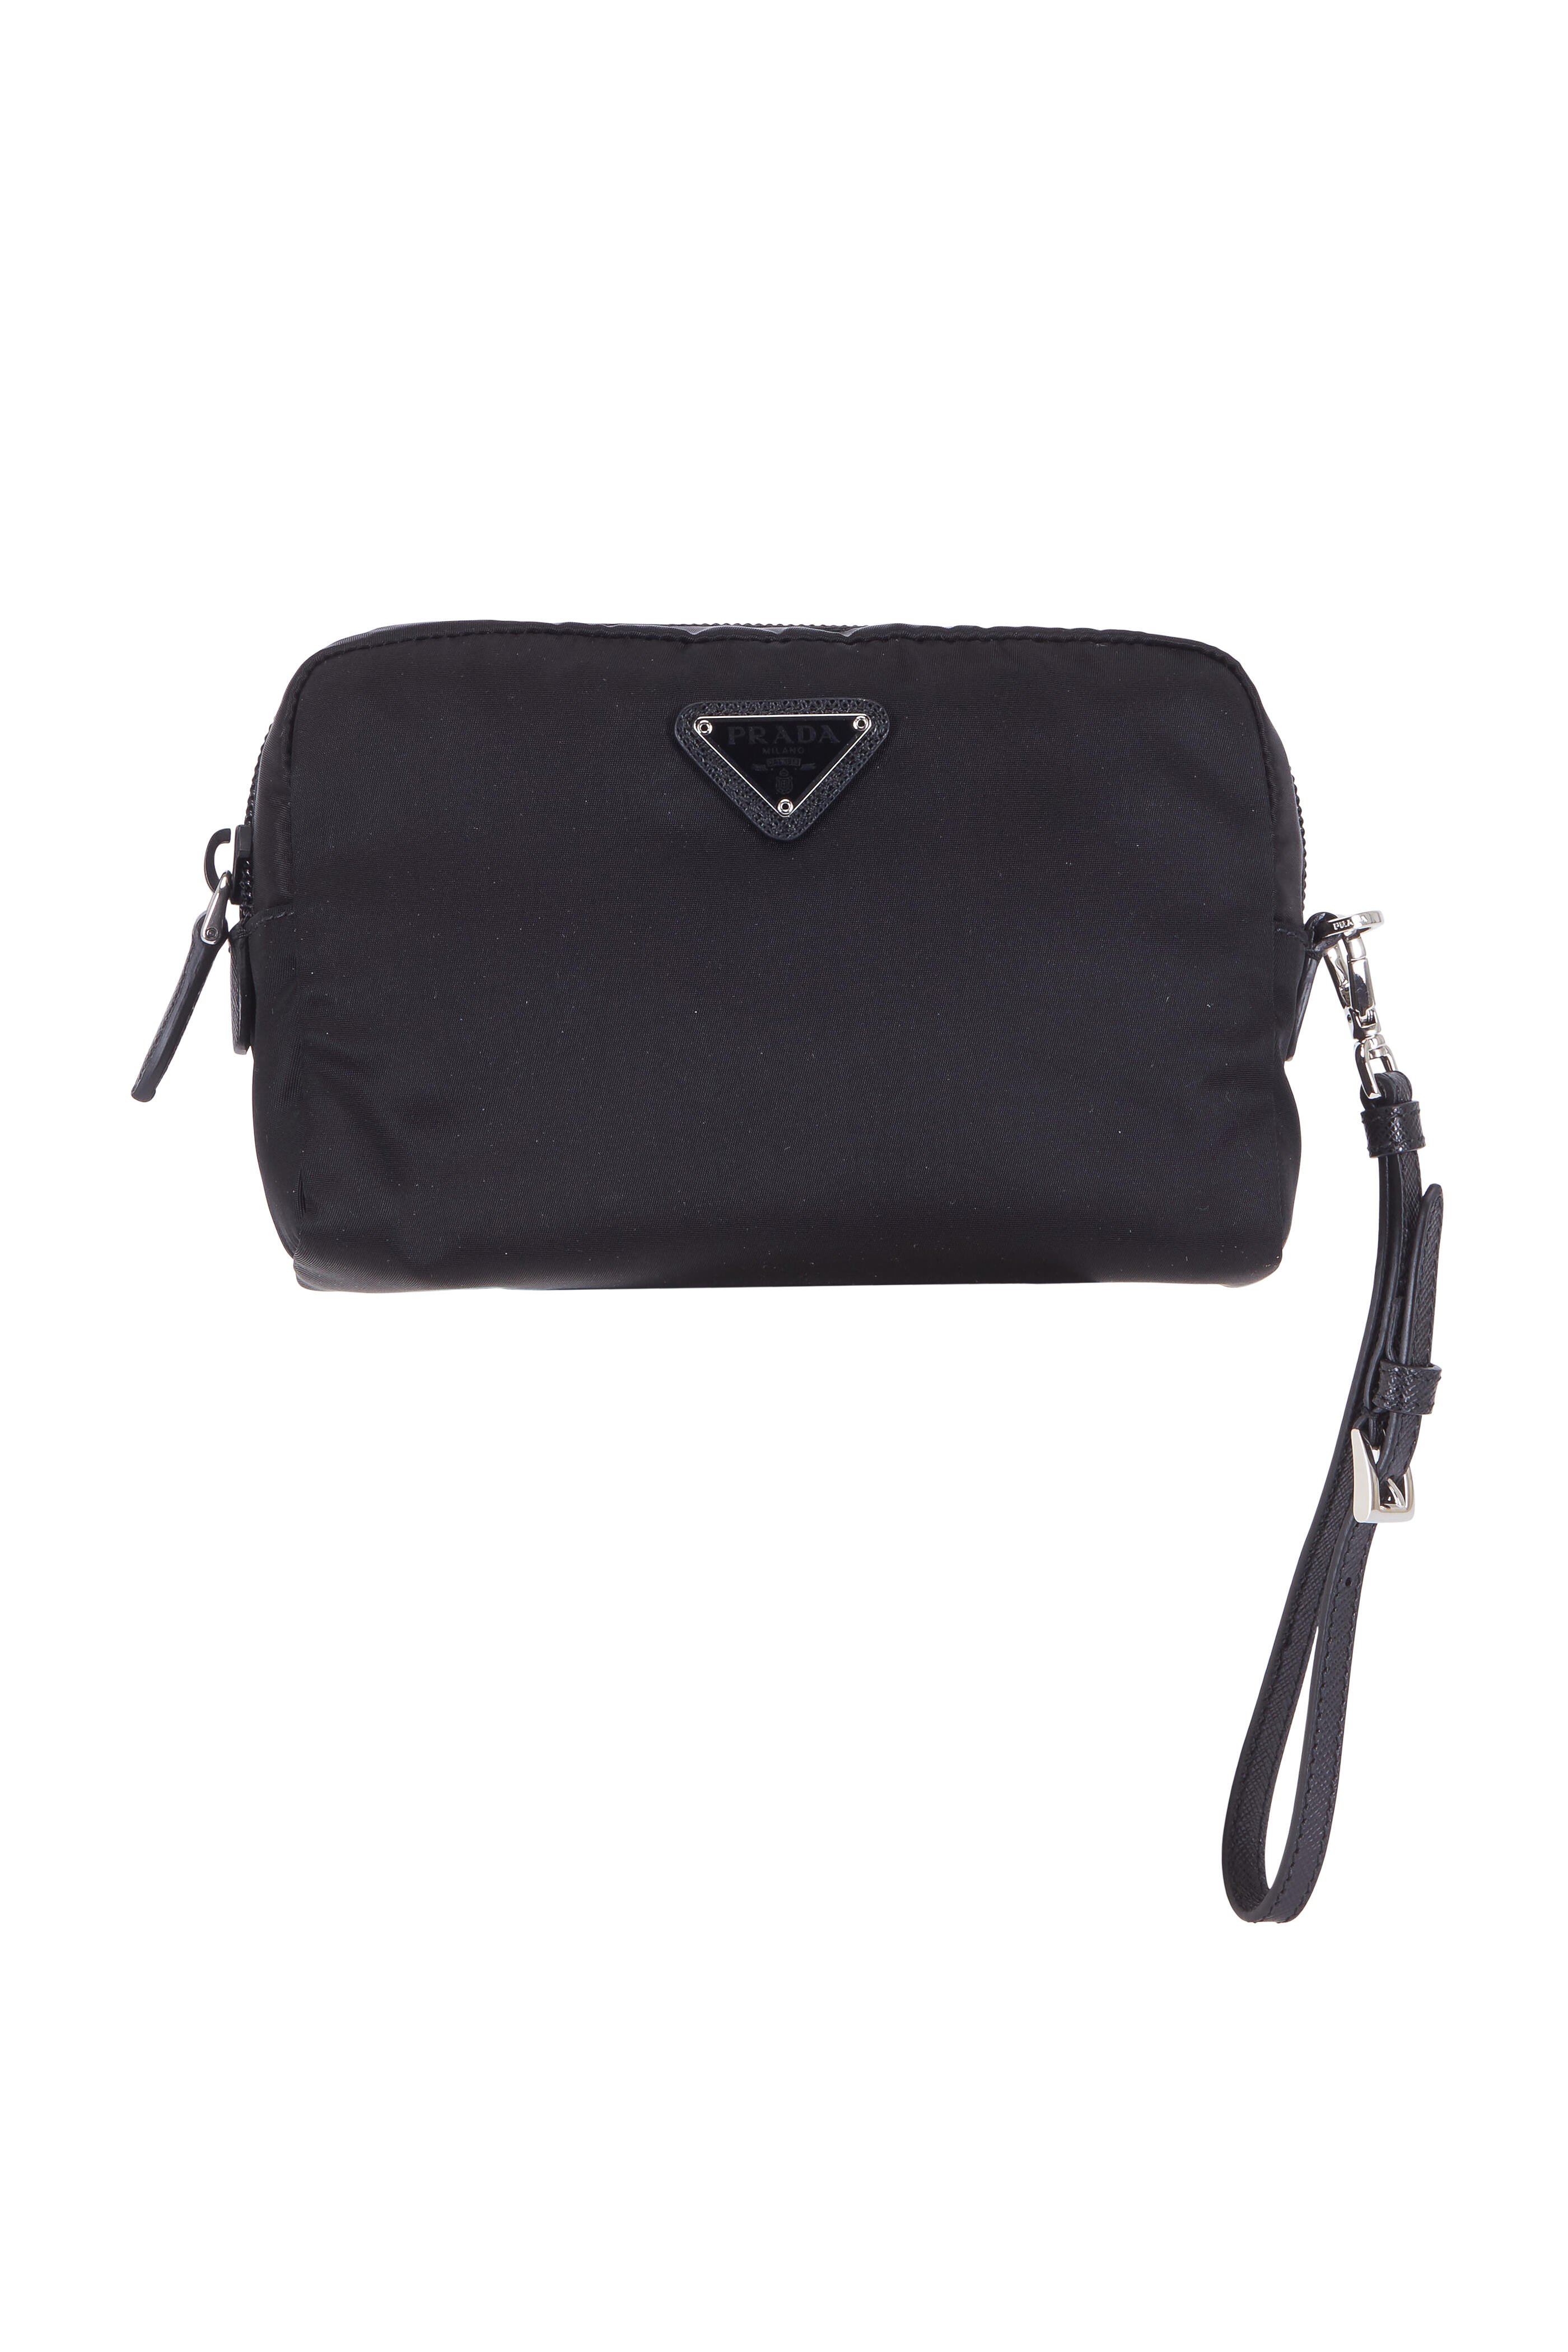 Prada - Black Tessuto Mini Cosmetic Bag With Strap